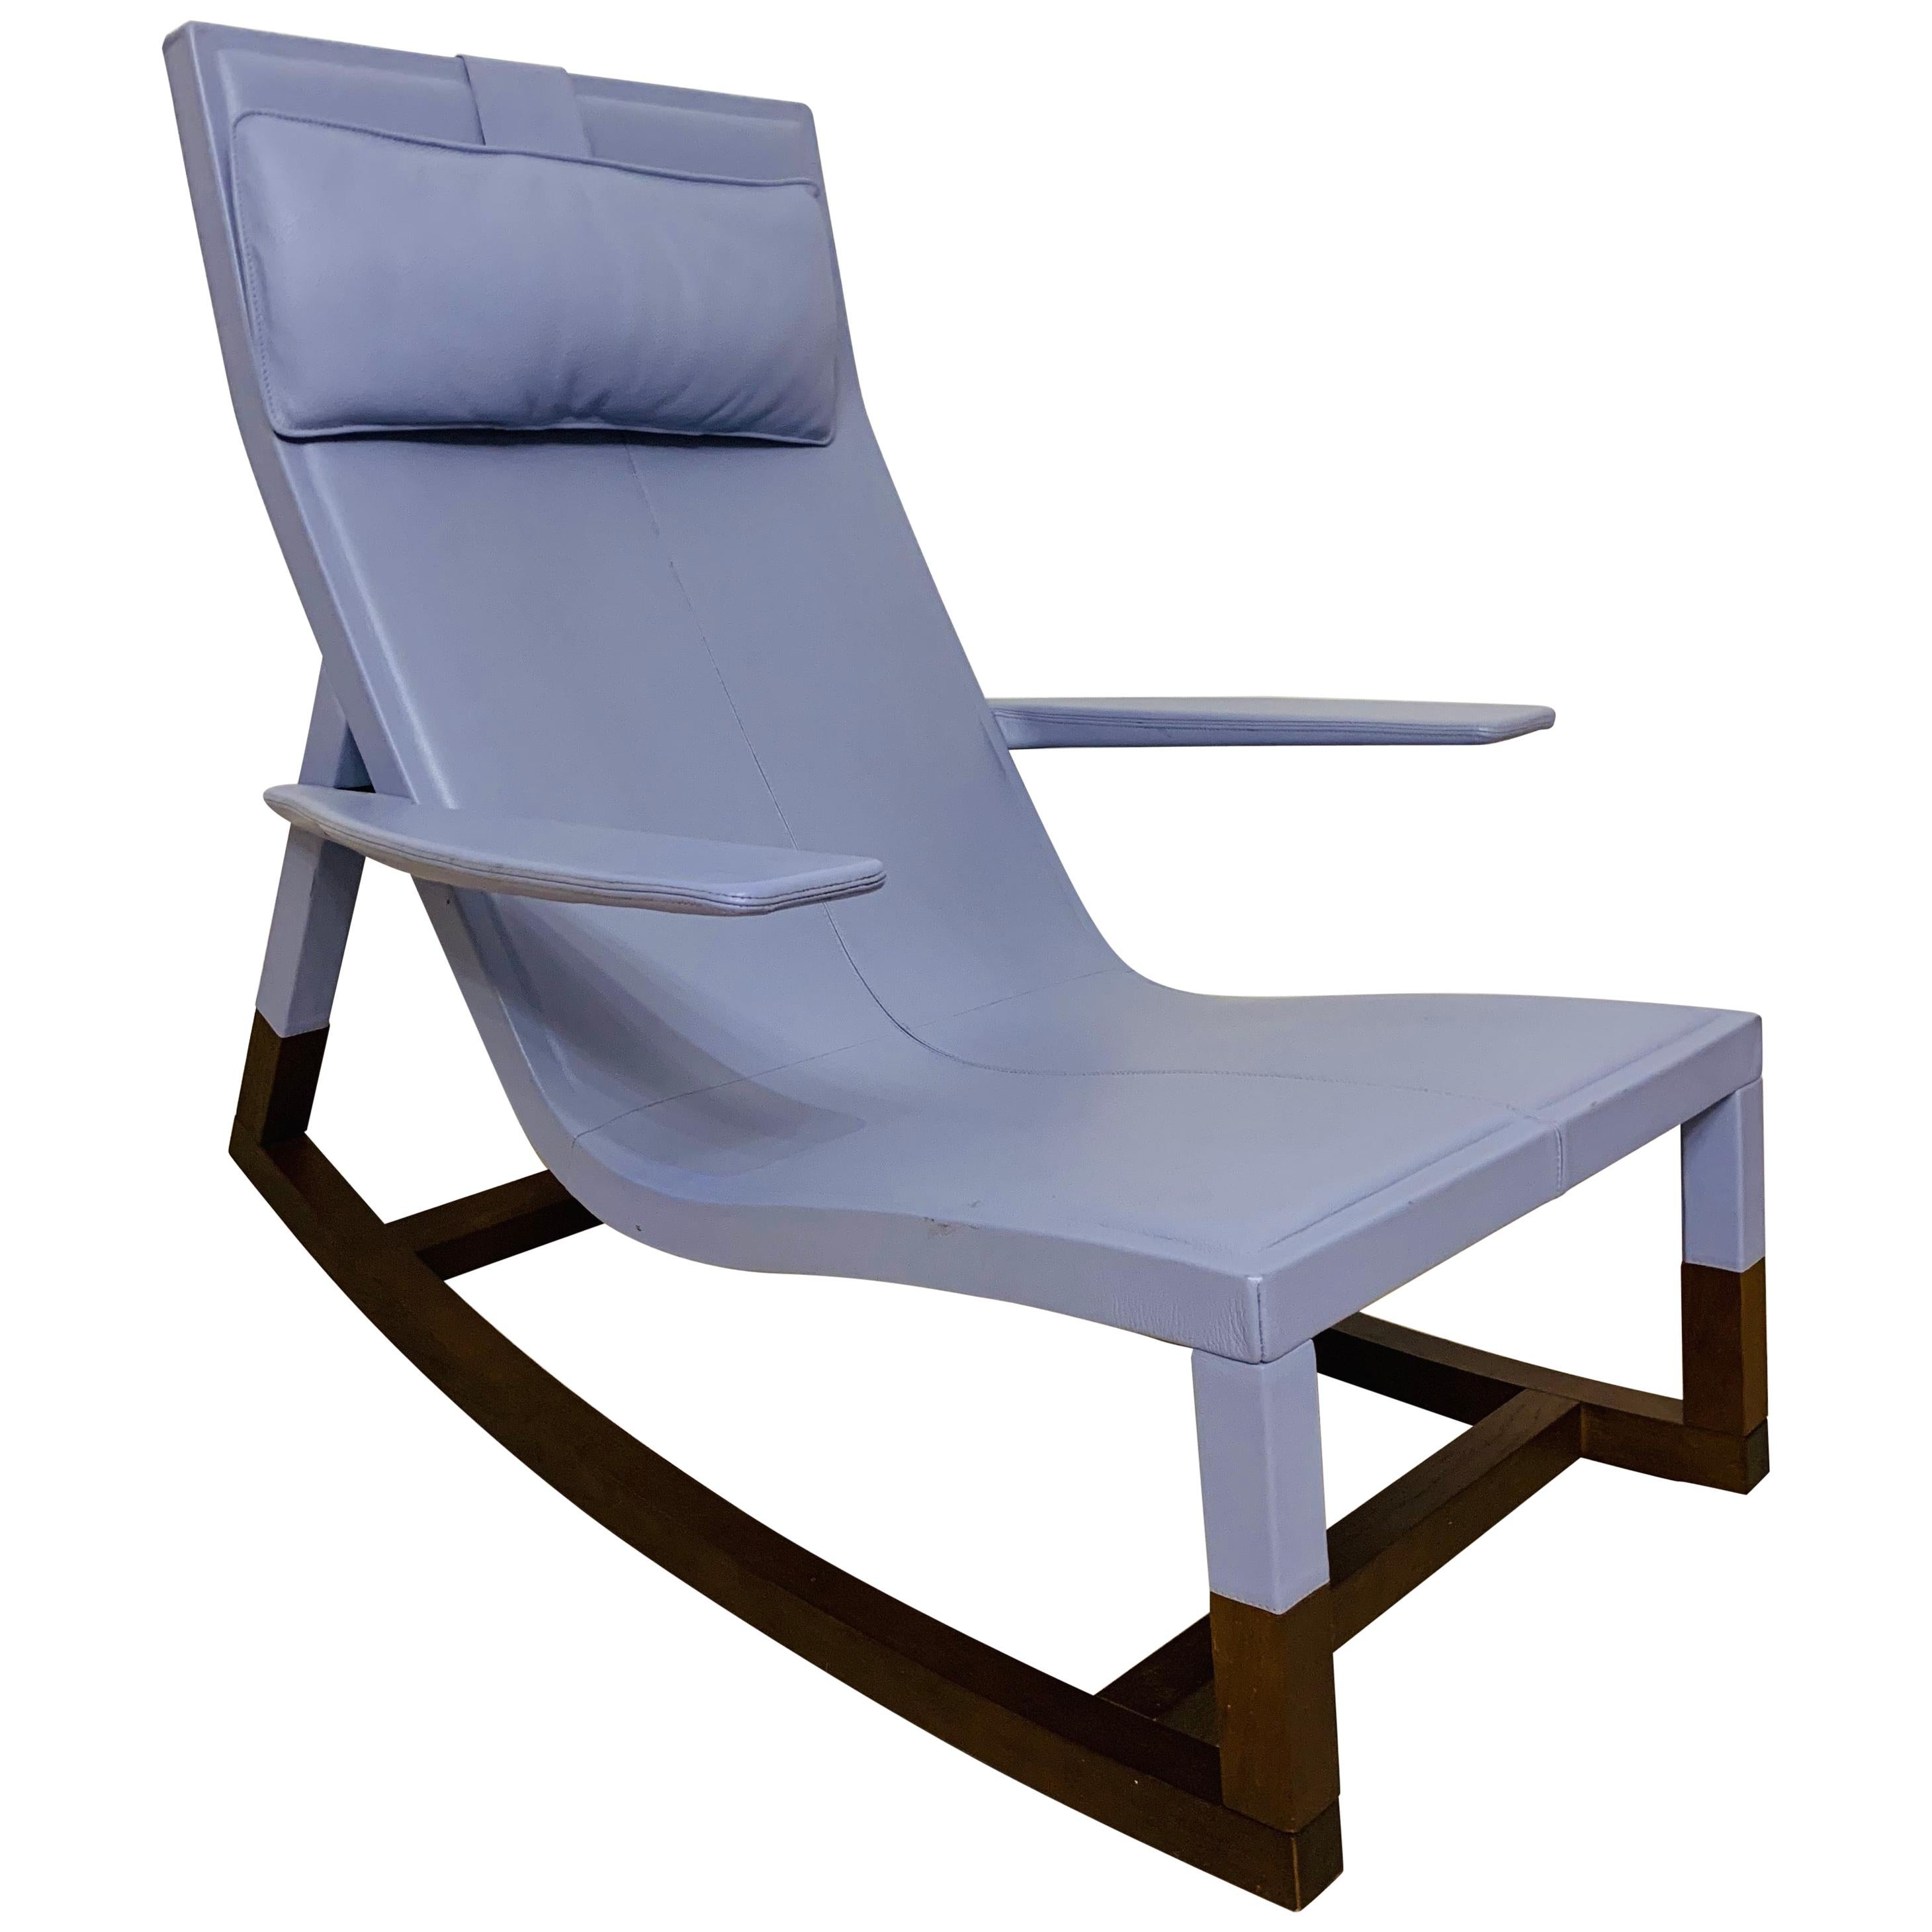 exclusive original Designer Chair light blue leather Poltrona Frau Don'Do  For Sale